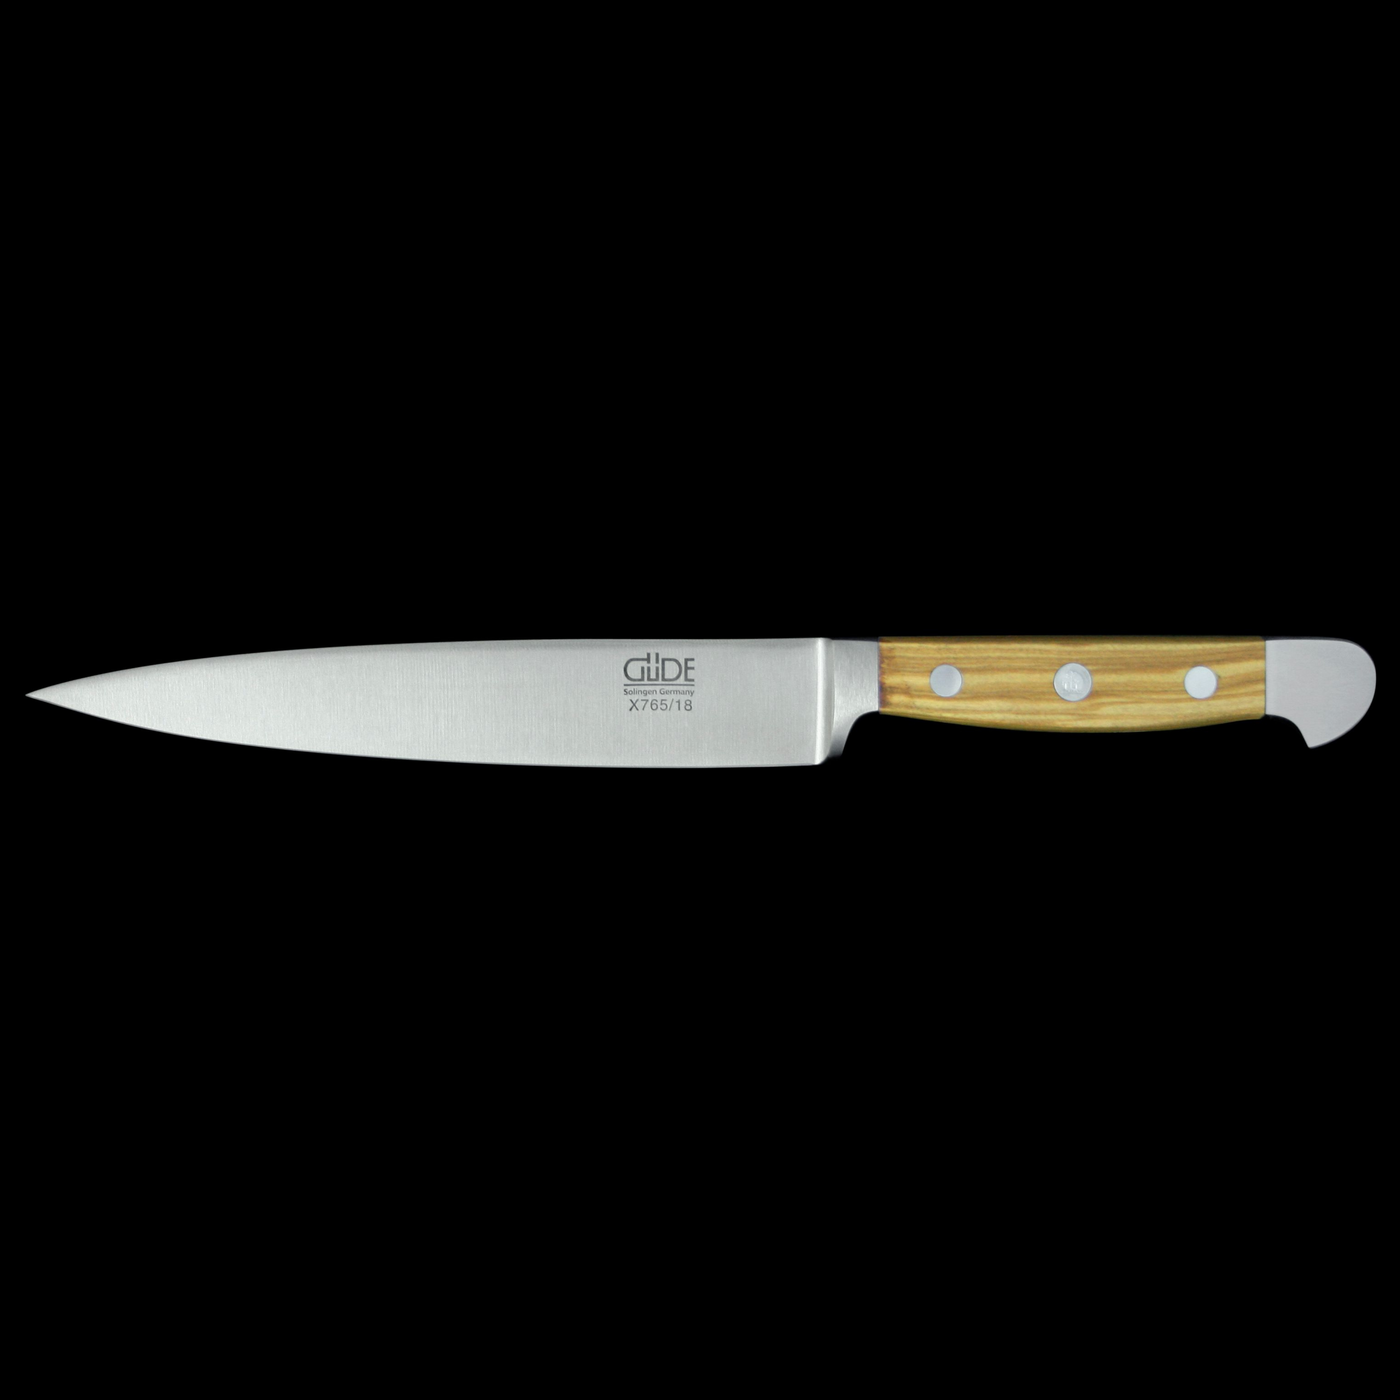 Gude Alpha Olive Flexible Fillet Knife With Olivewood Handle, 7-in - Kitchen Universe